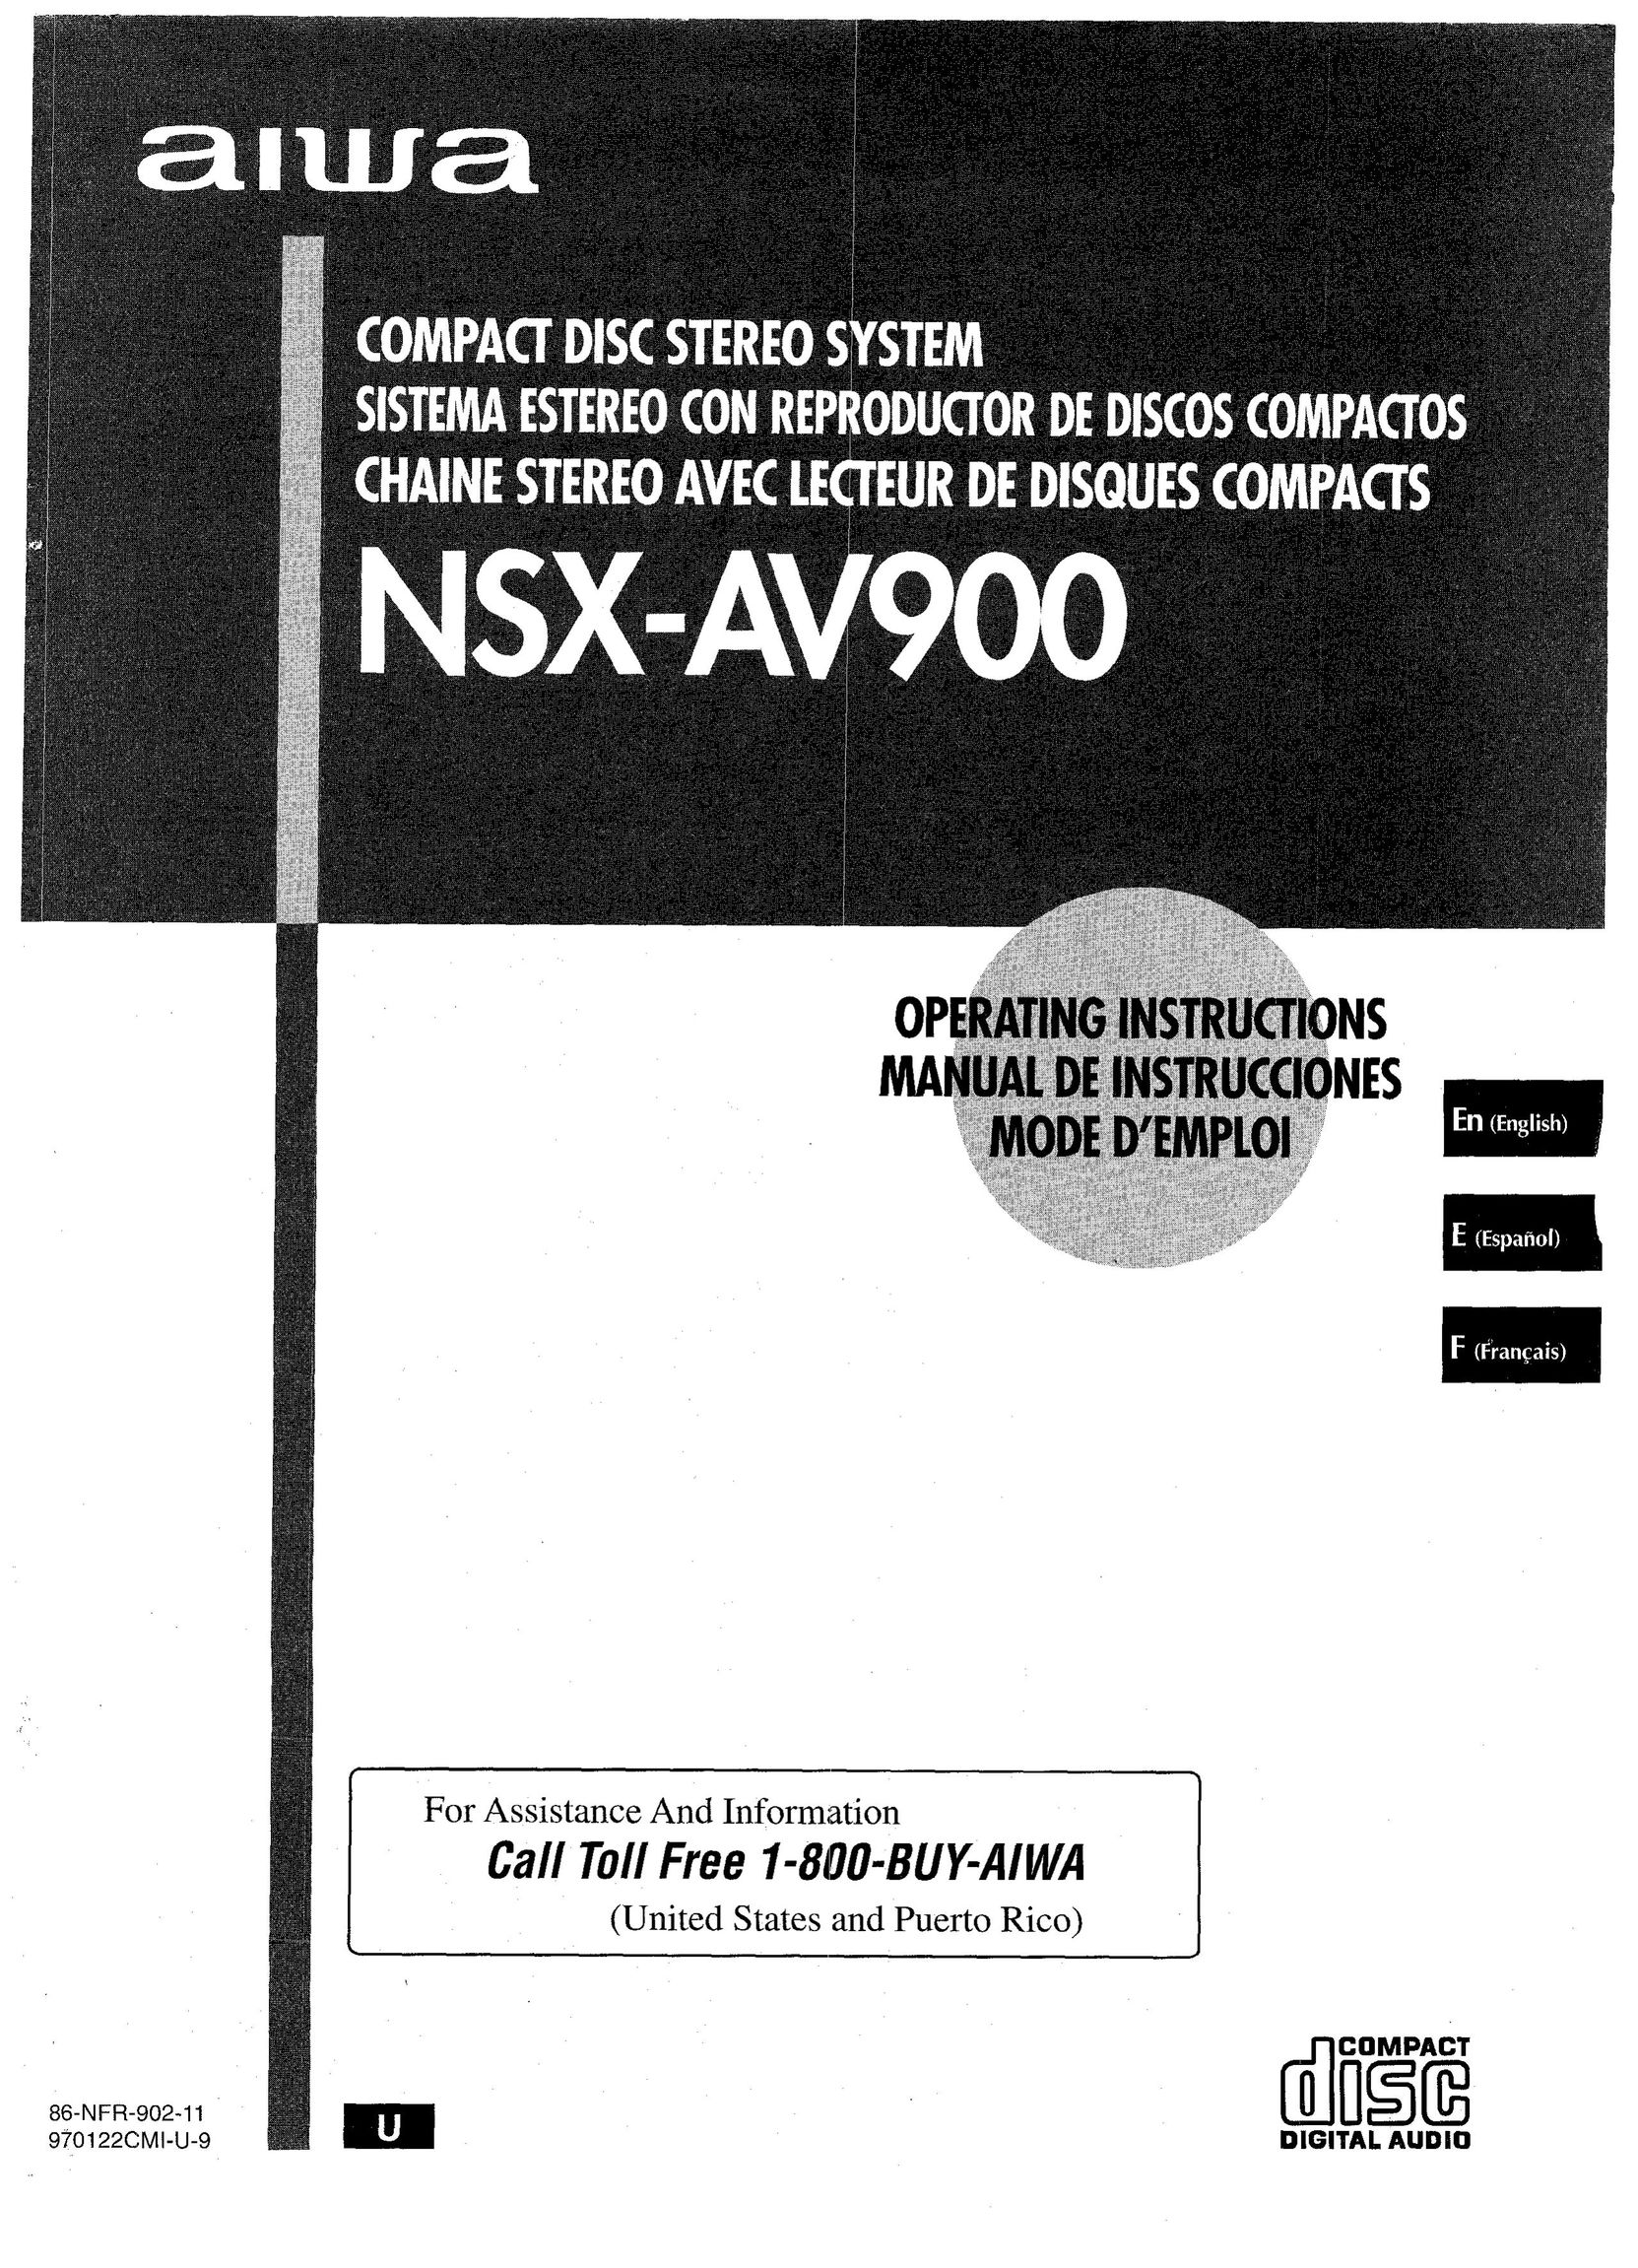 Aiwa NSX-AV900 CD Player User Manual